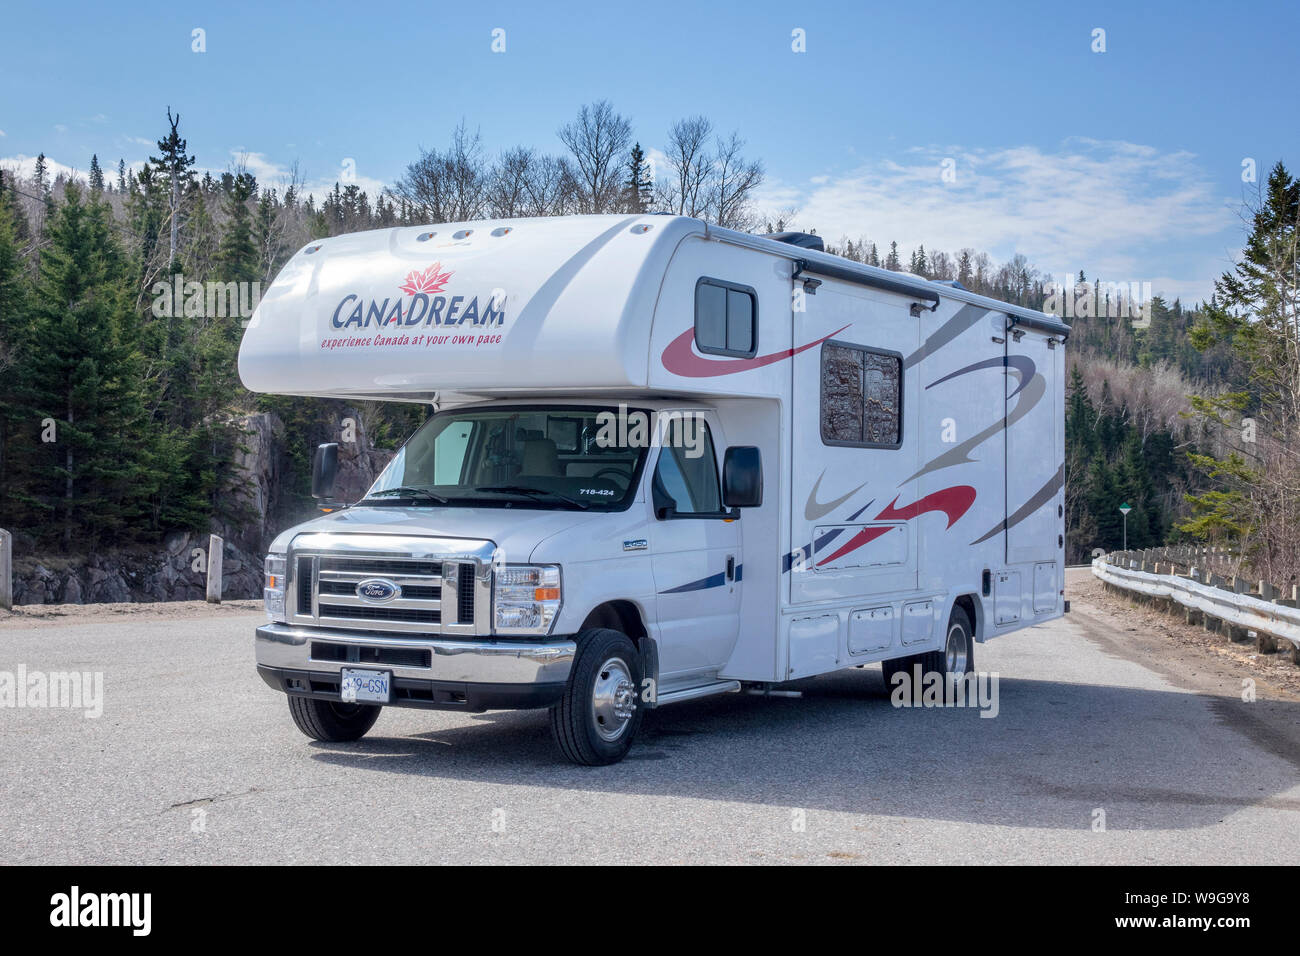 Un lecteur de l'auto nord-américain de classe C Location de Camping RV Camping-car, dans le Nord de l'Ontario, Canada Banque D'Images